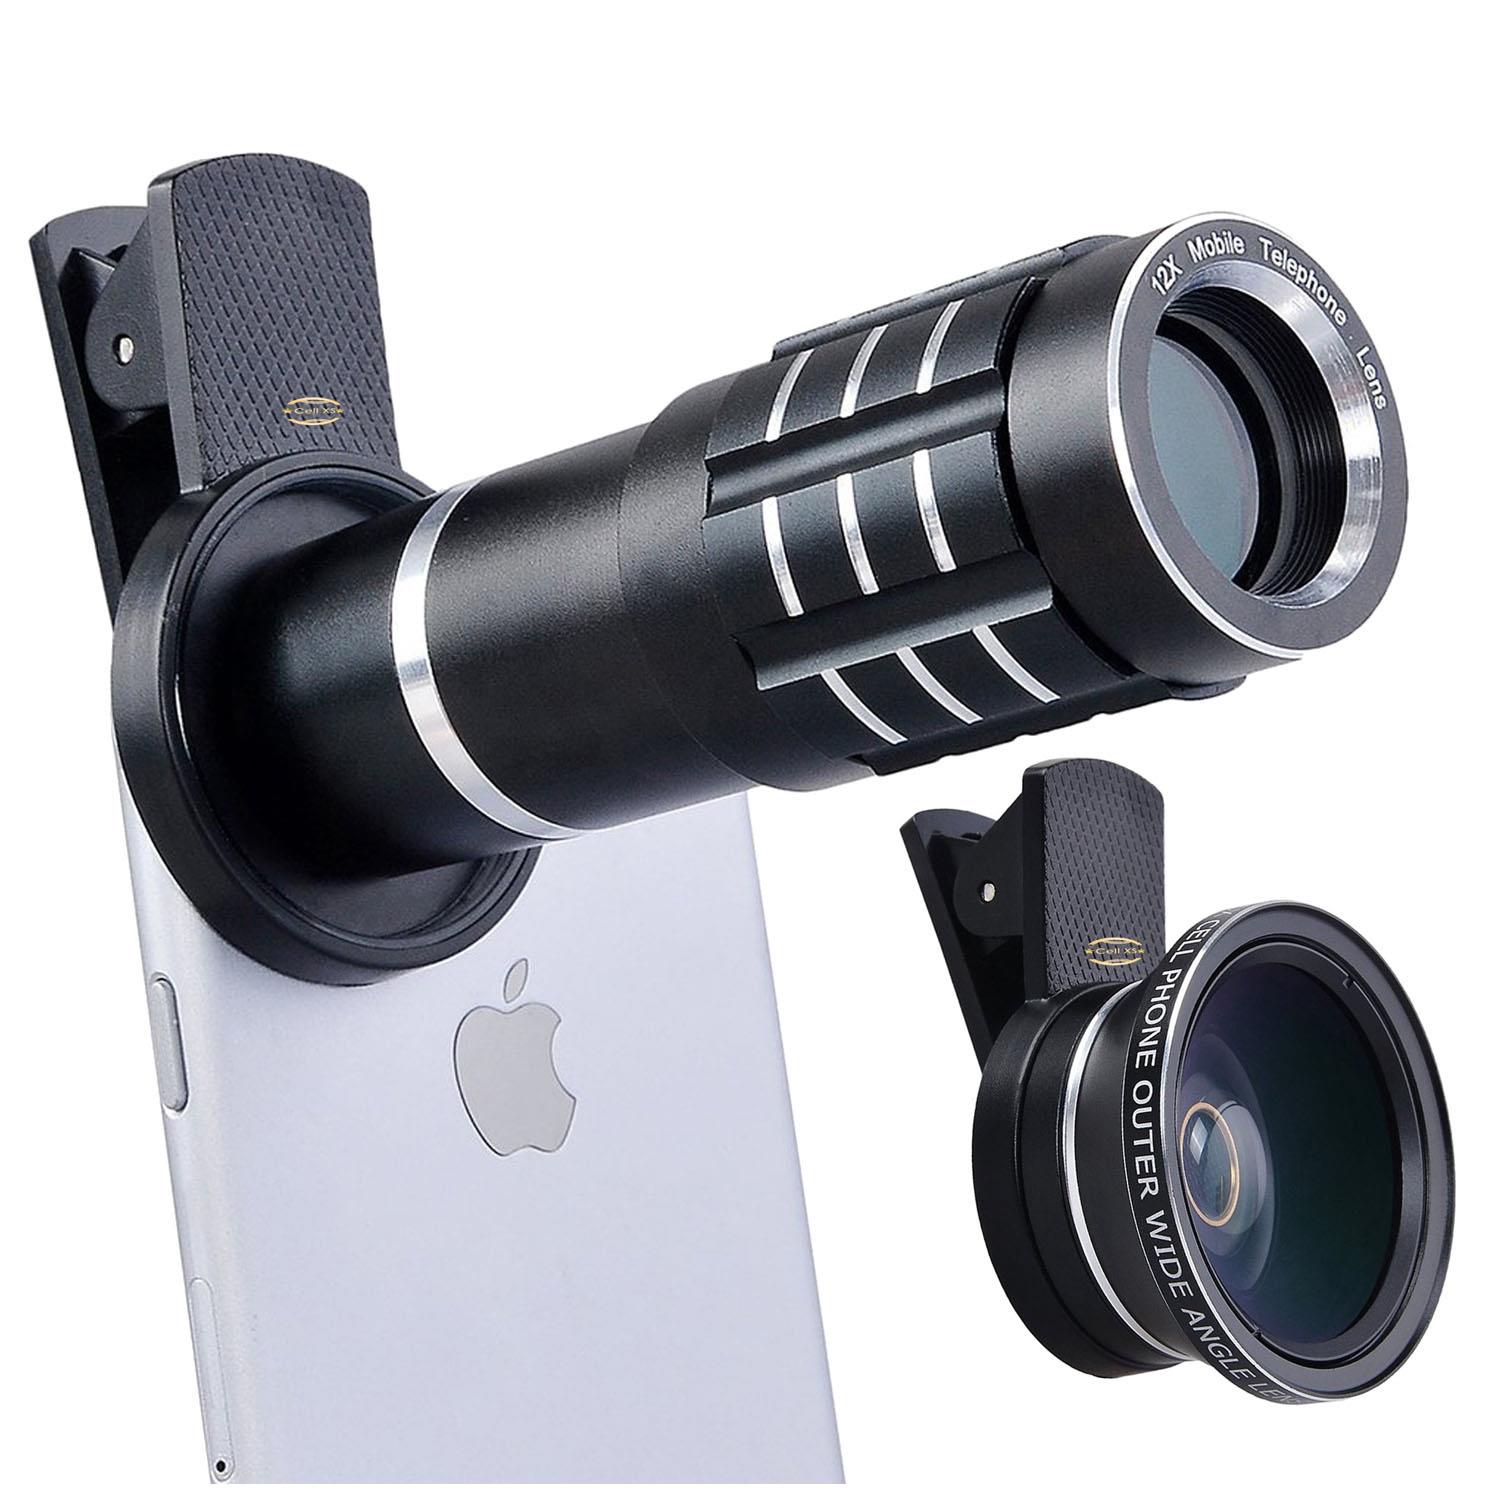 Telephoto Zoom Lens 12x + Wide Angle Lens 0.45x. Macro